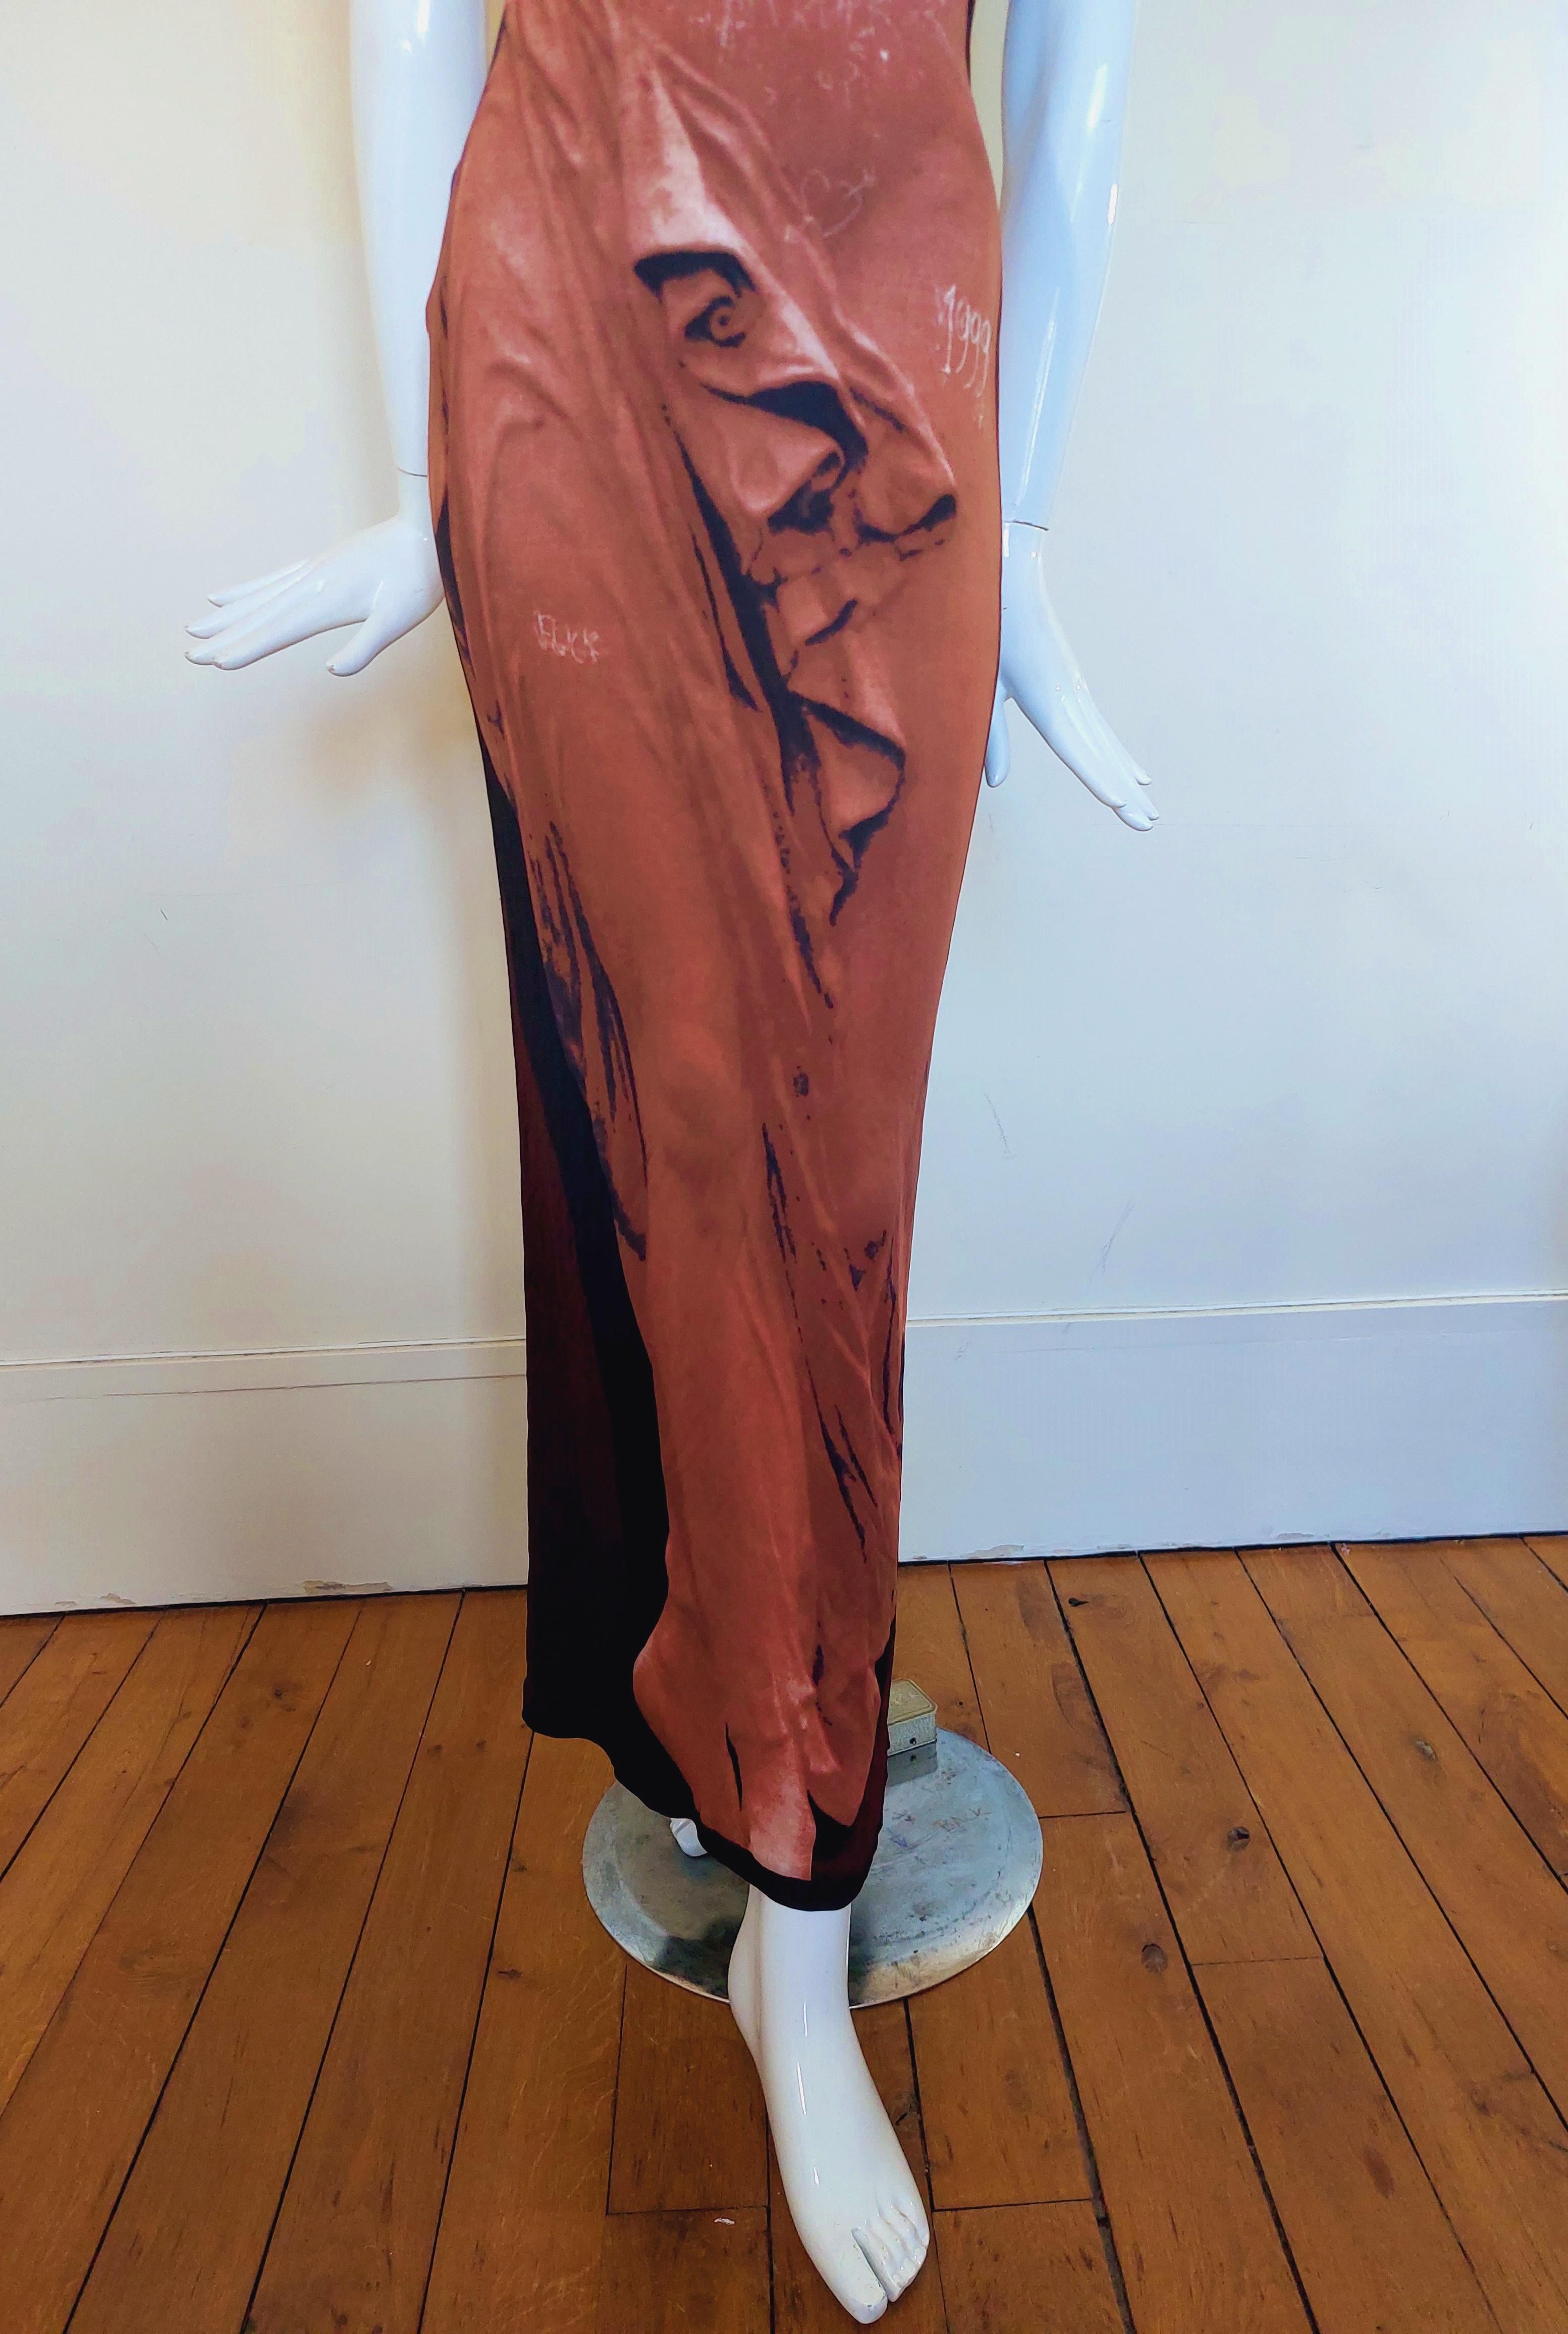 Jean Paul Gaultier S1999 Graffiti Goddess Venus Nude Trompe L'oeil Runway Dress For Sale 4